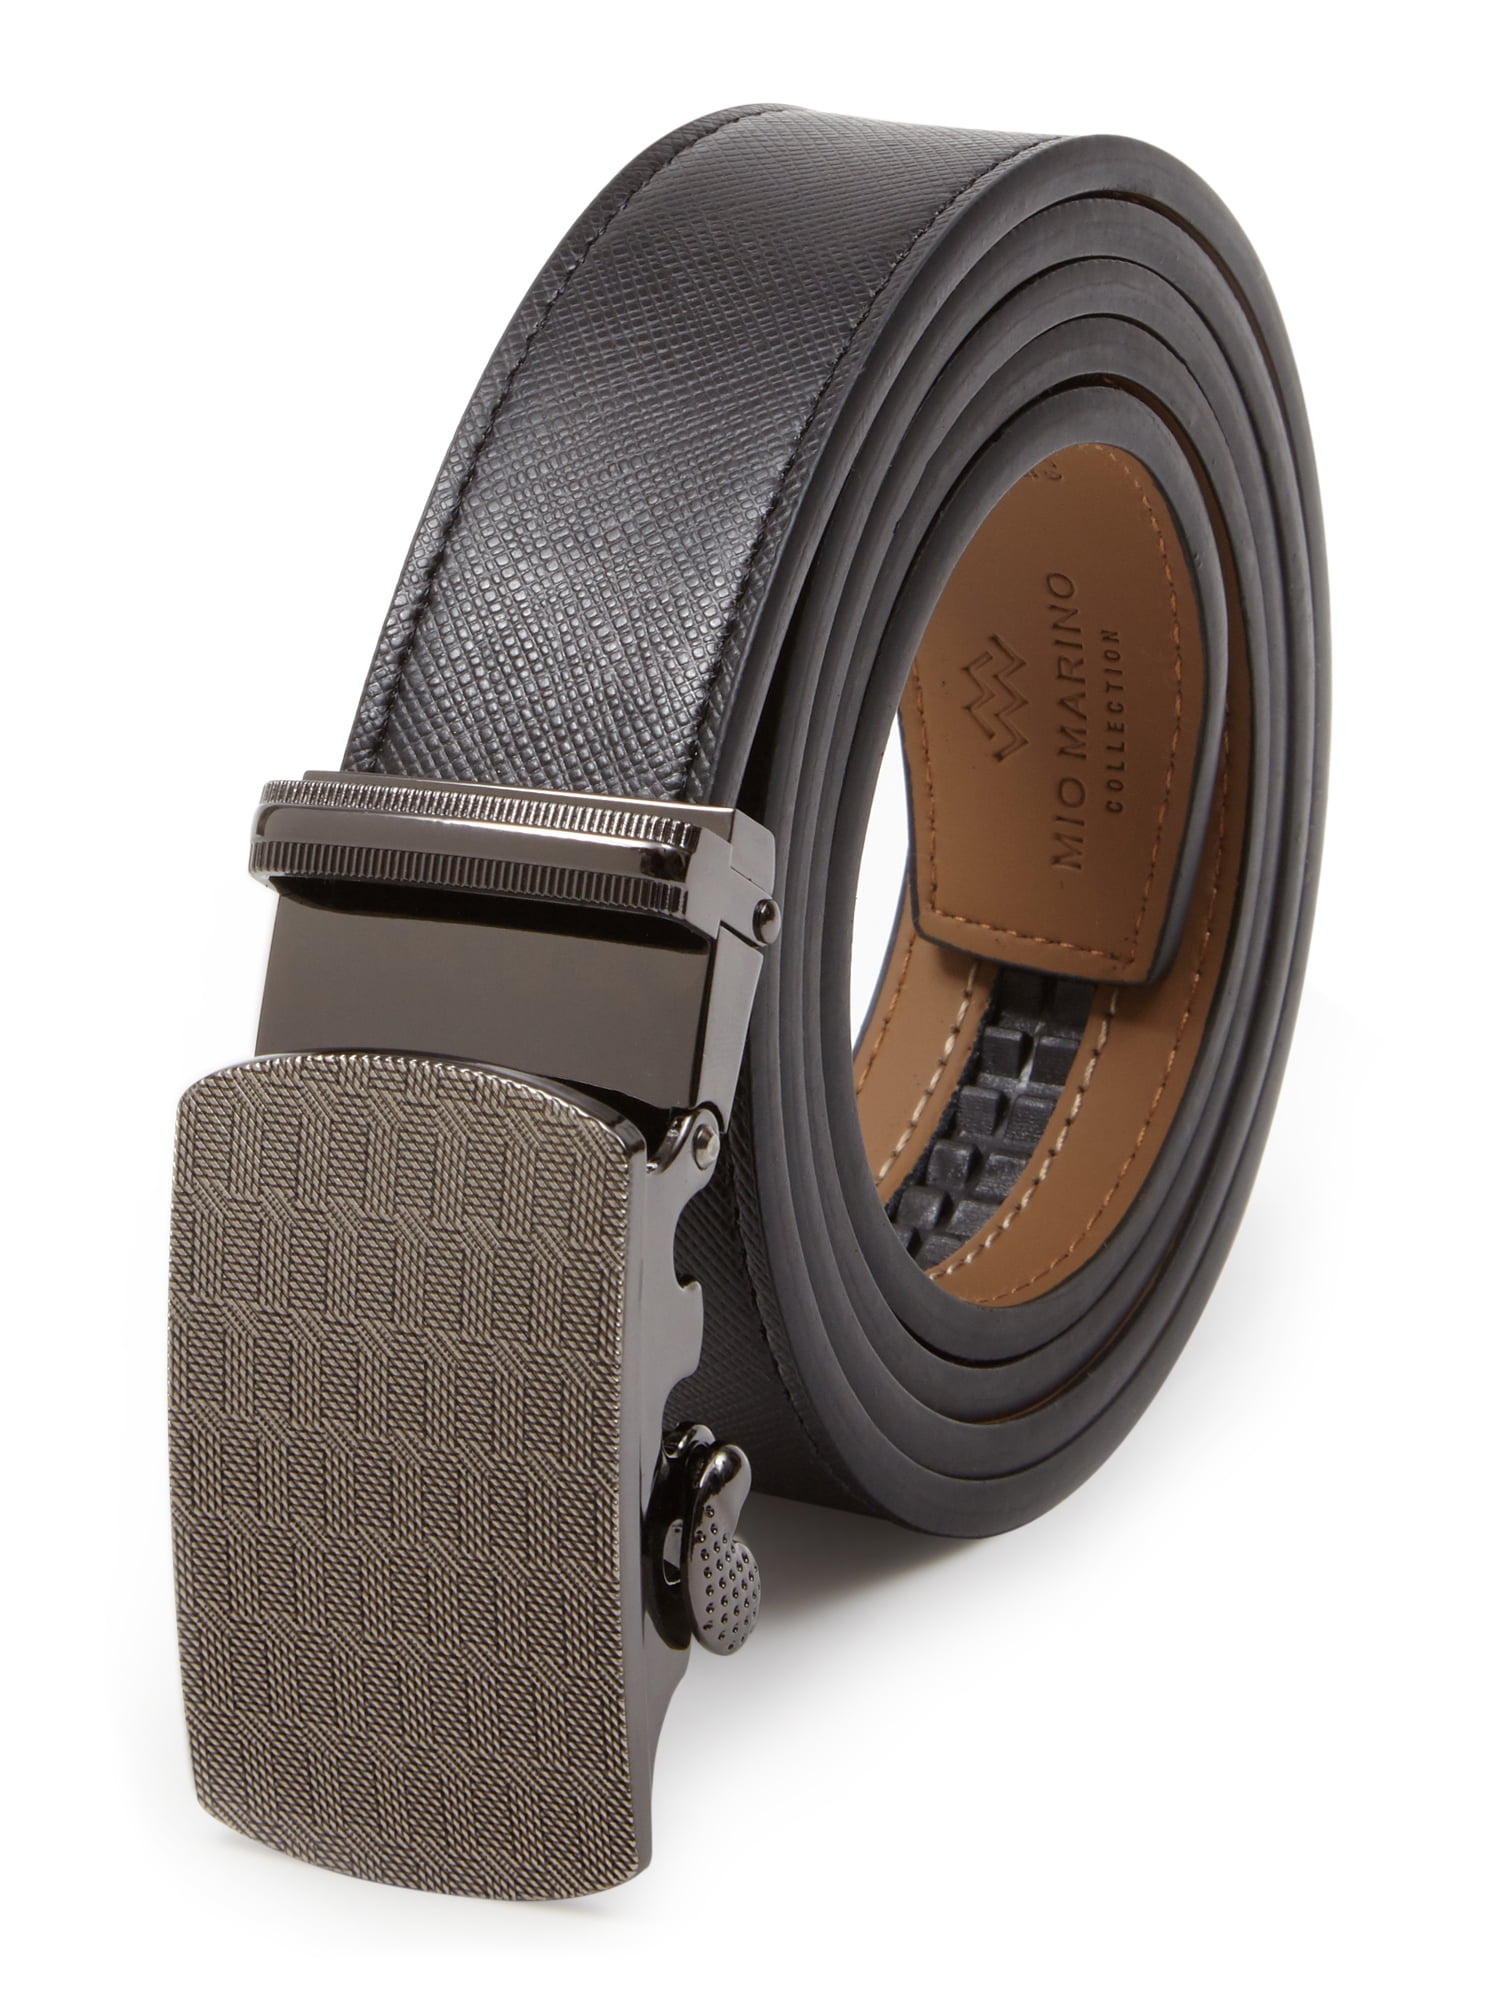 Mio Marino Men's Netted Leather Ratchet Belt